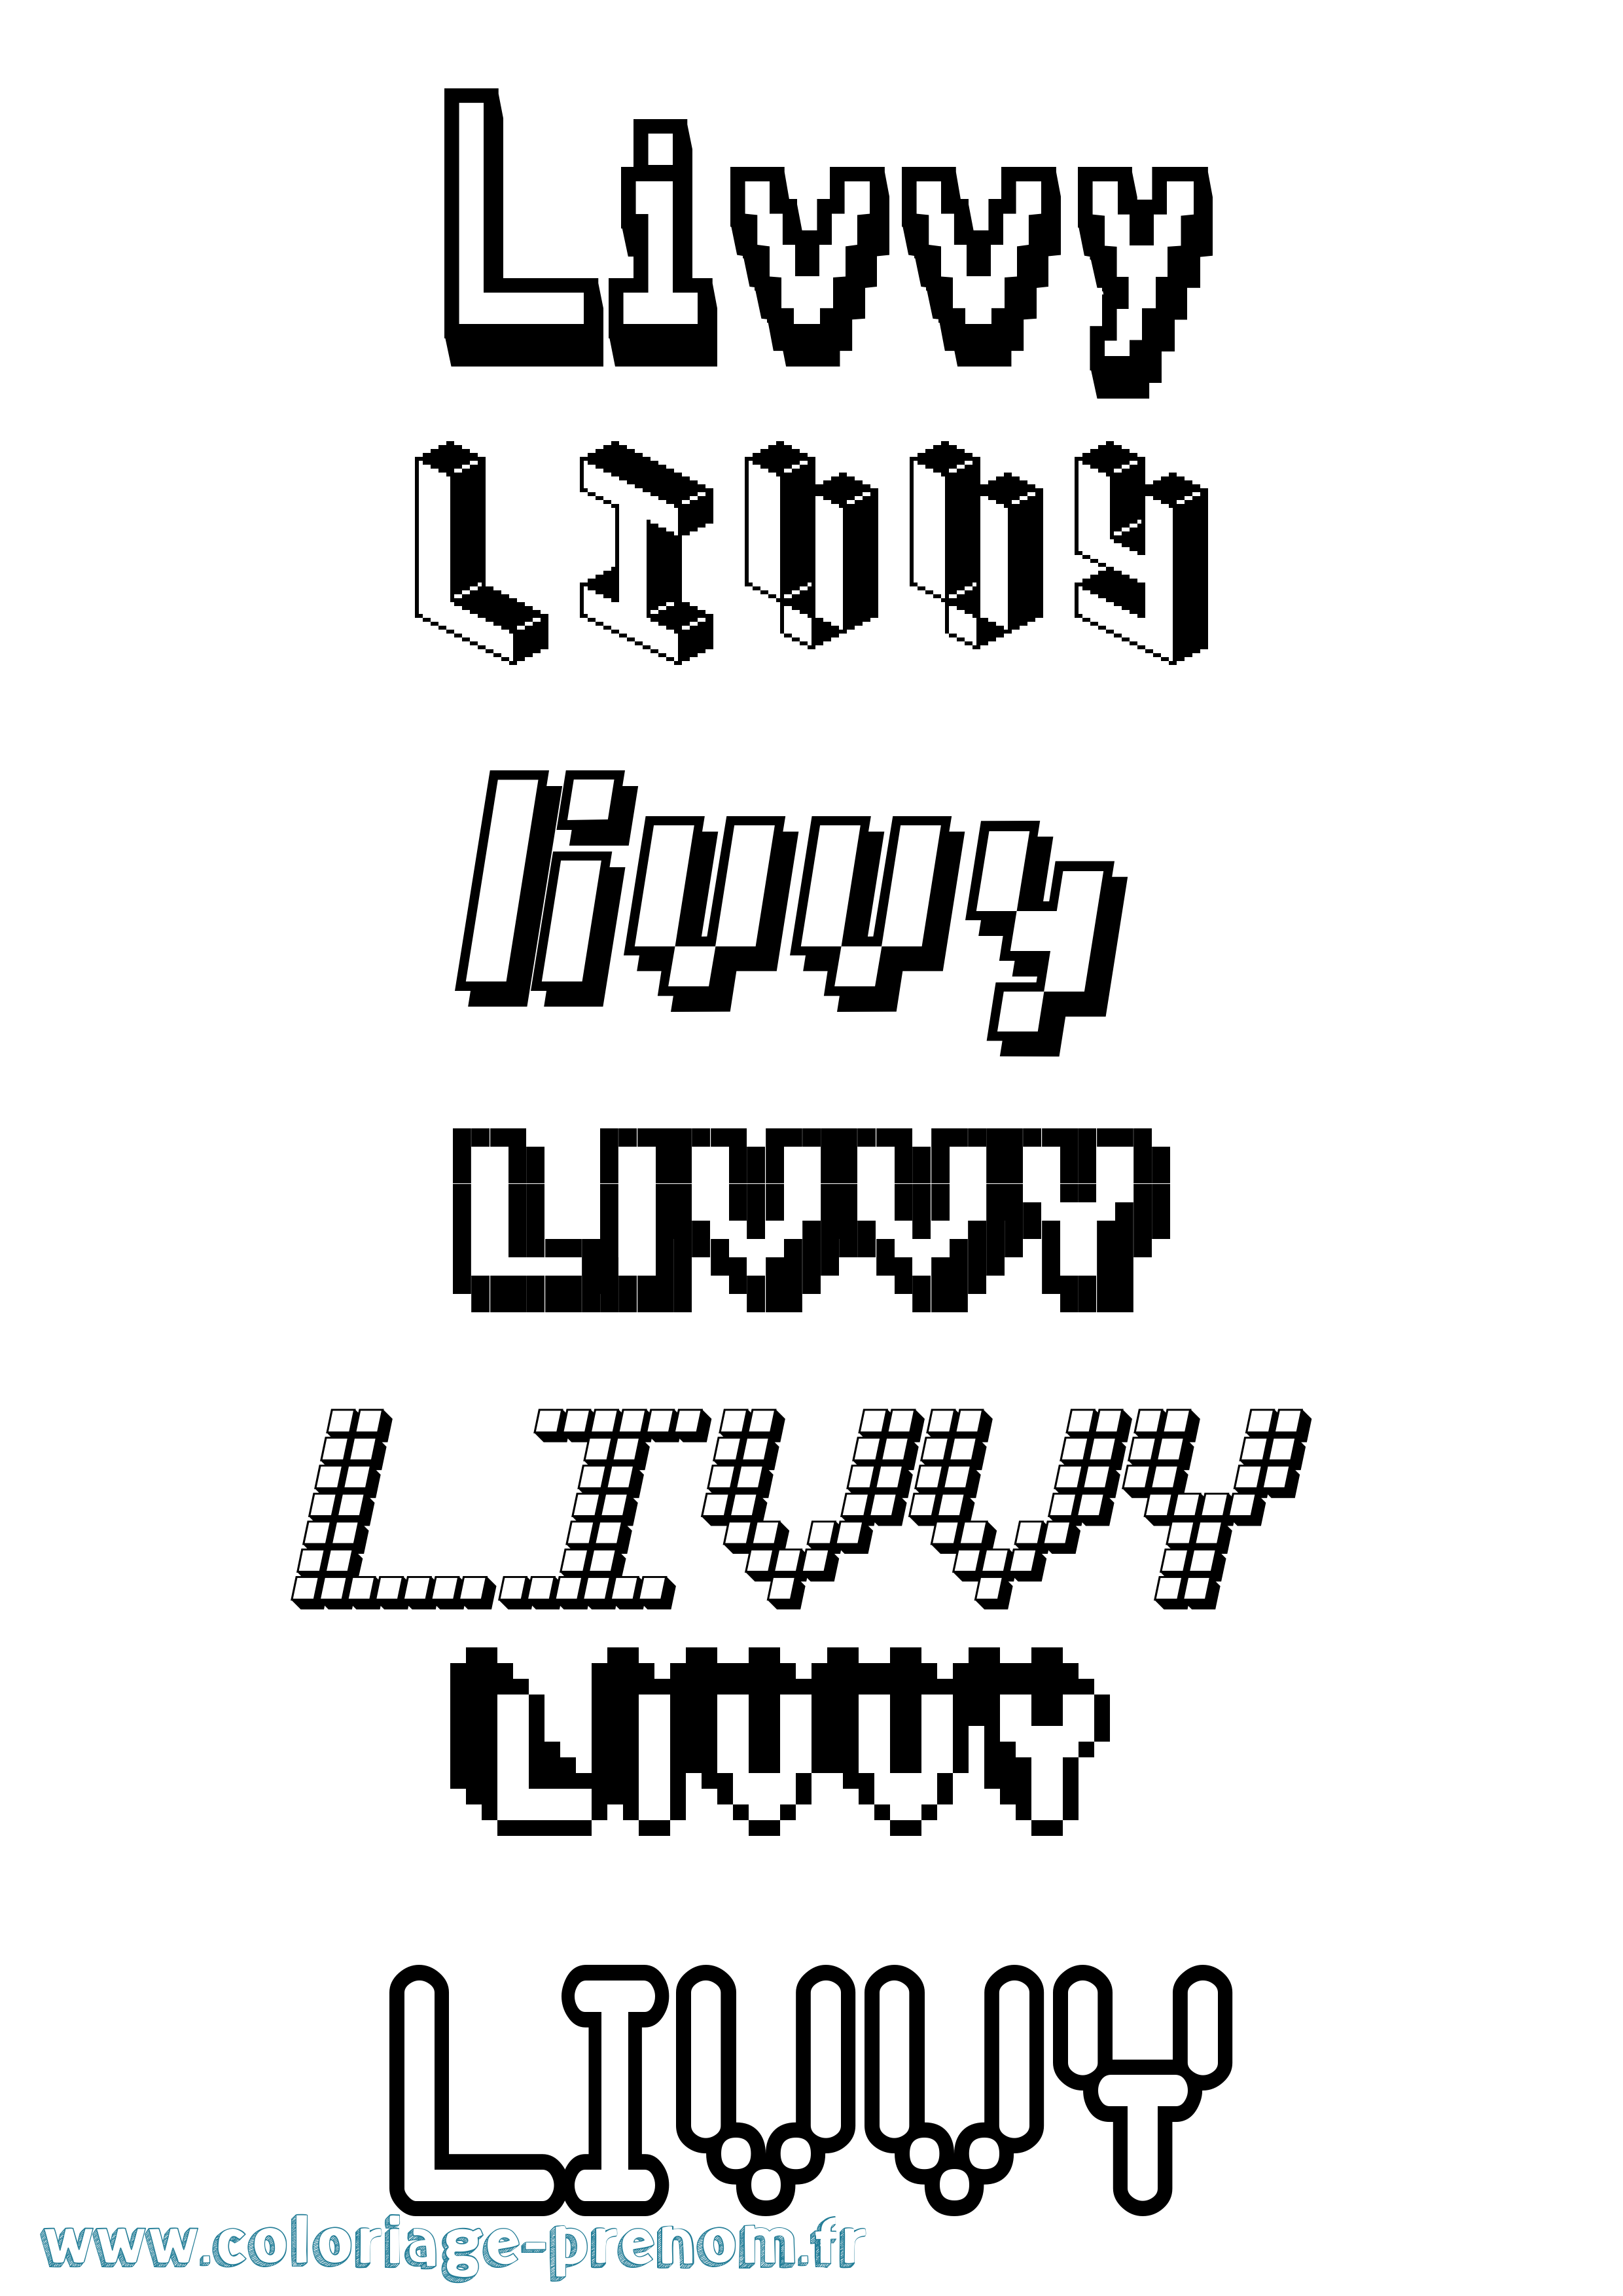 Coloriage prénom Livvy Pixel